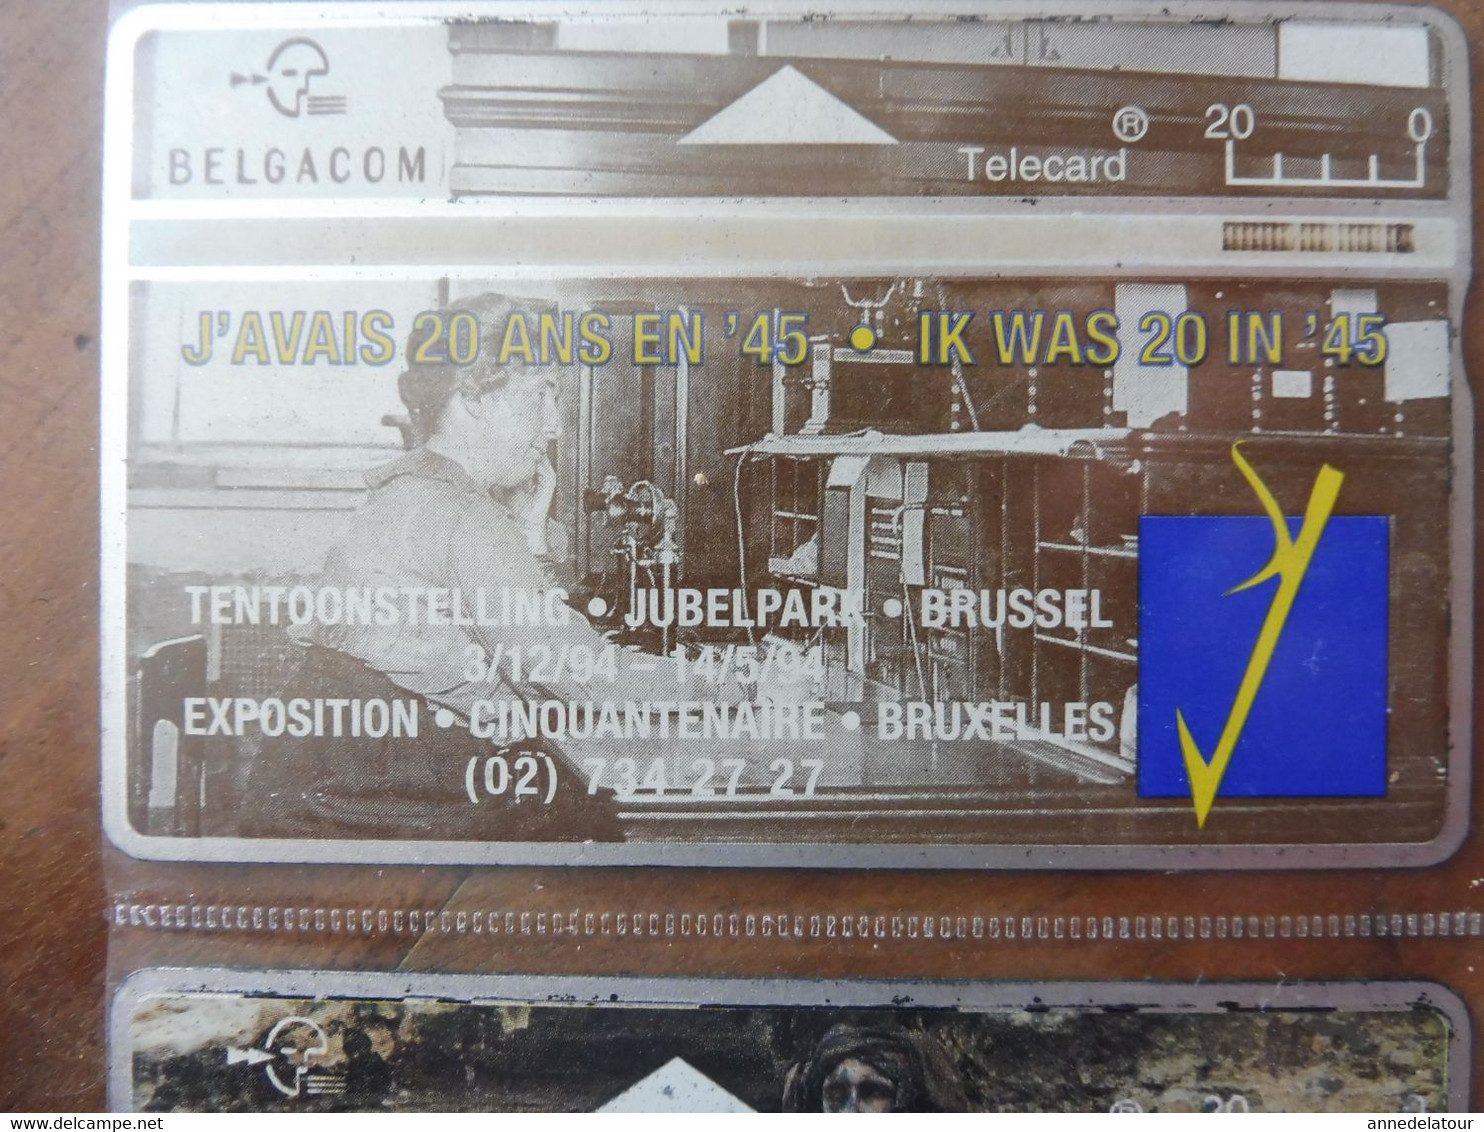 10 BELGACOM telecard  - Pubs (Charleroi B.D., RALLYE des HAUTES FAGNES , Happy New Year 96 , WORLD CHAMPIONSHIP, etc